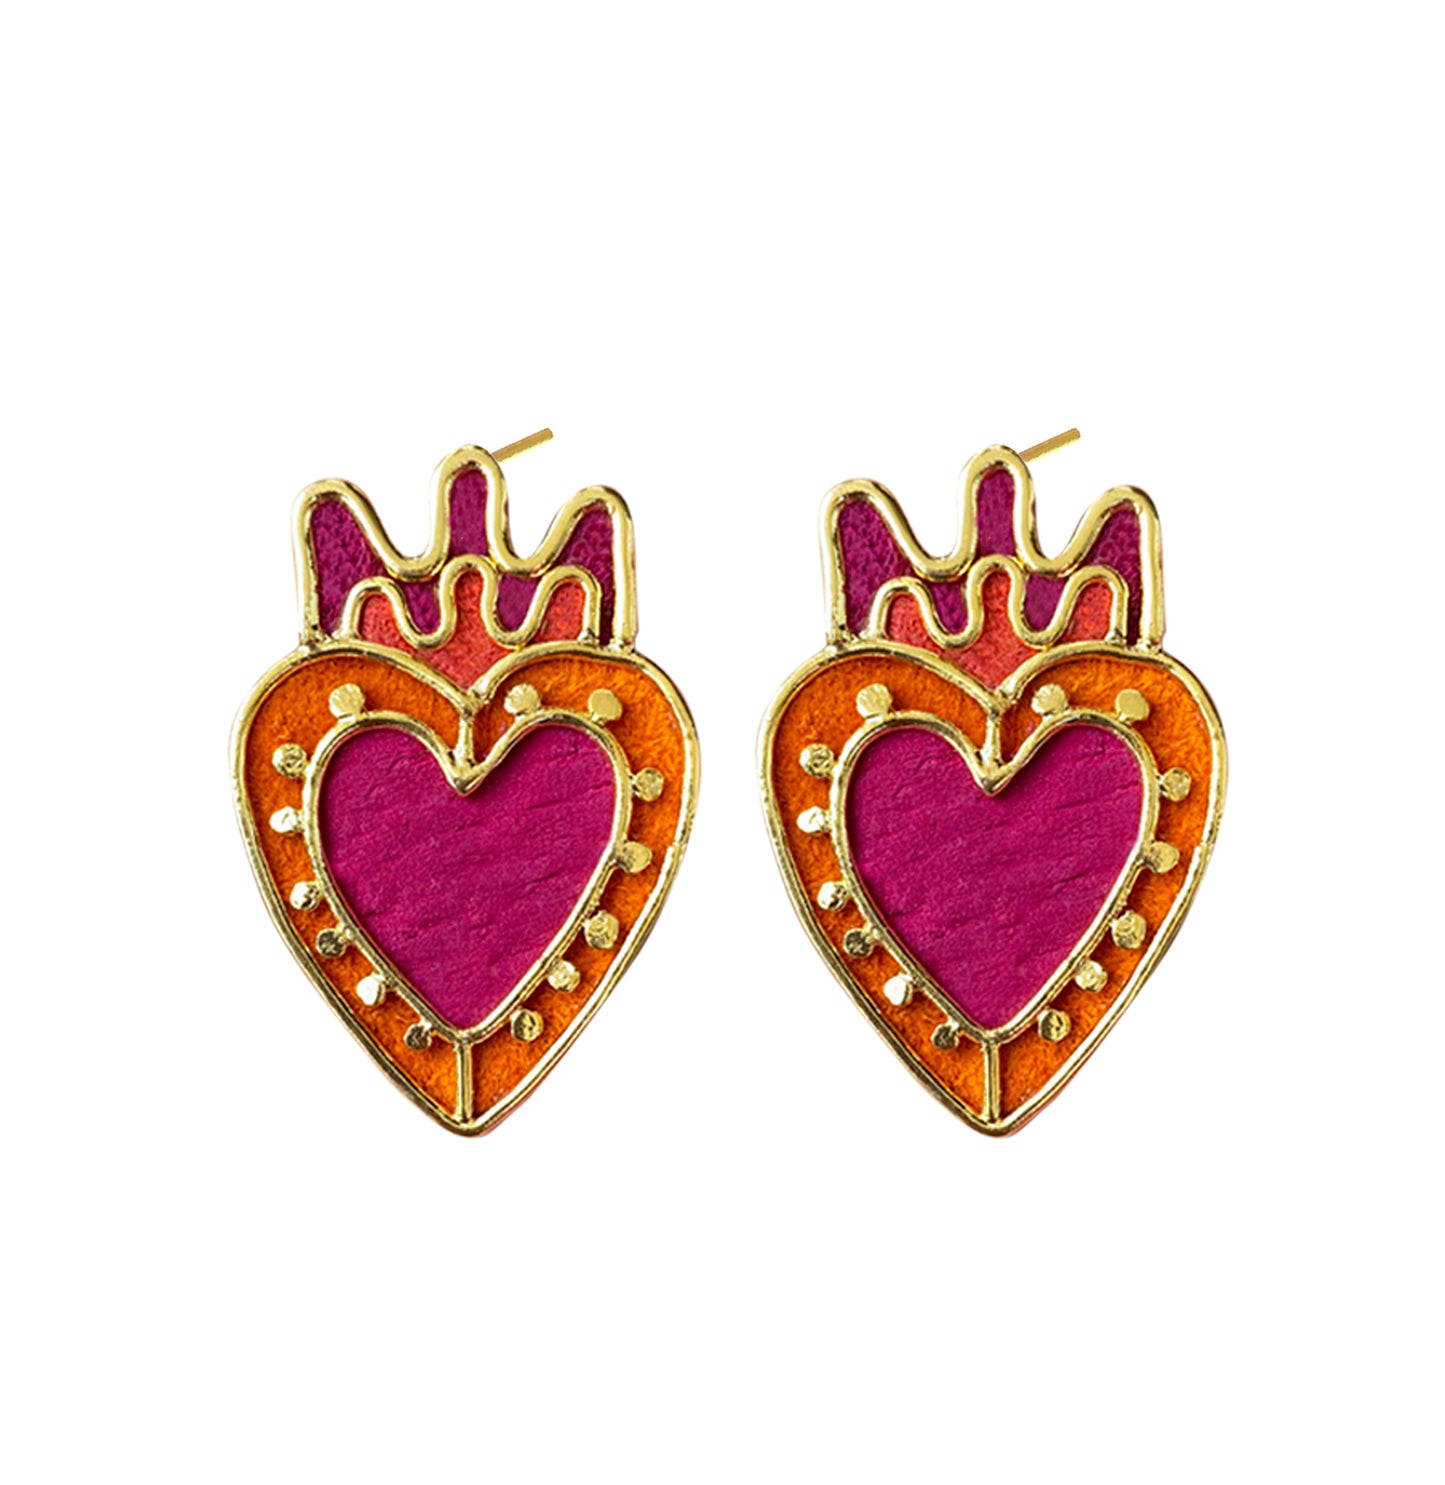 Studs Mini Corazón y Punto I Earrings by Amulettos